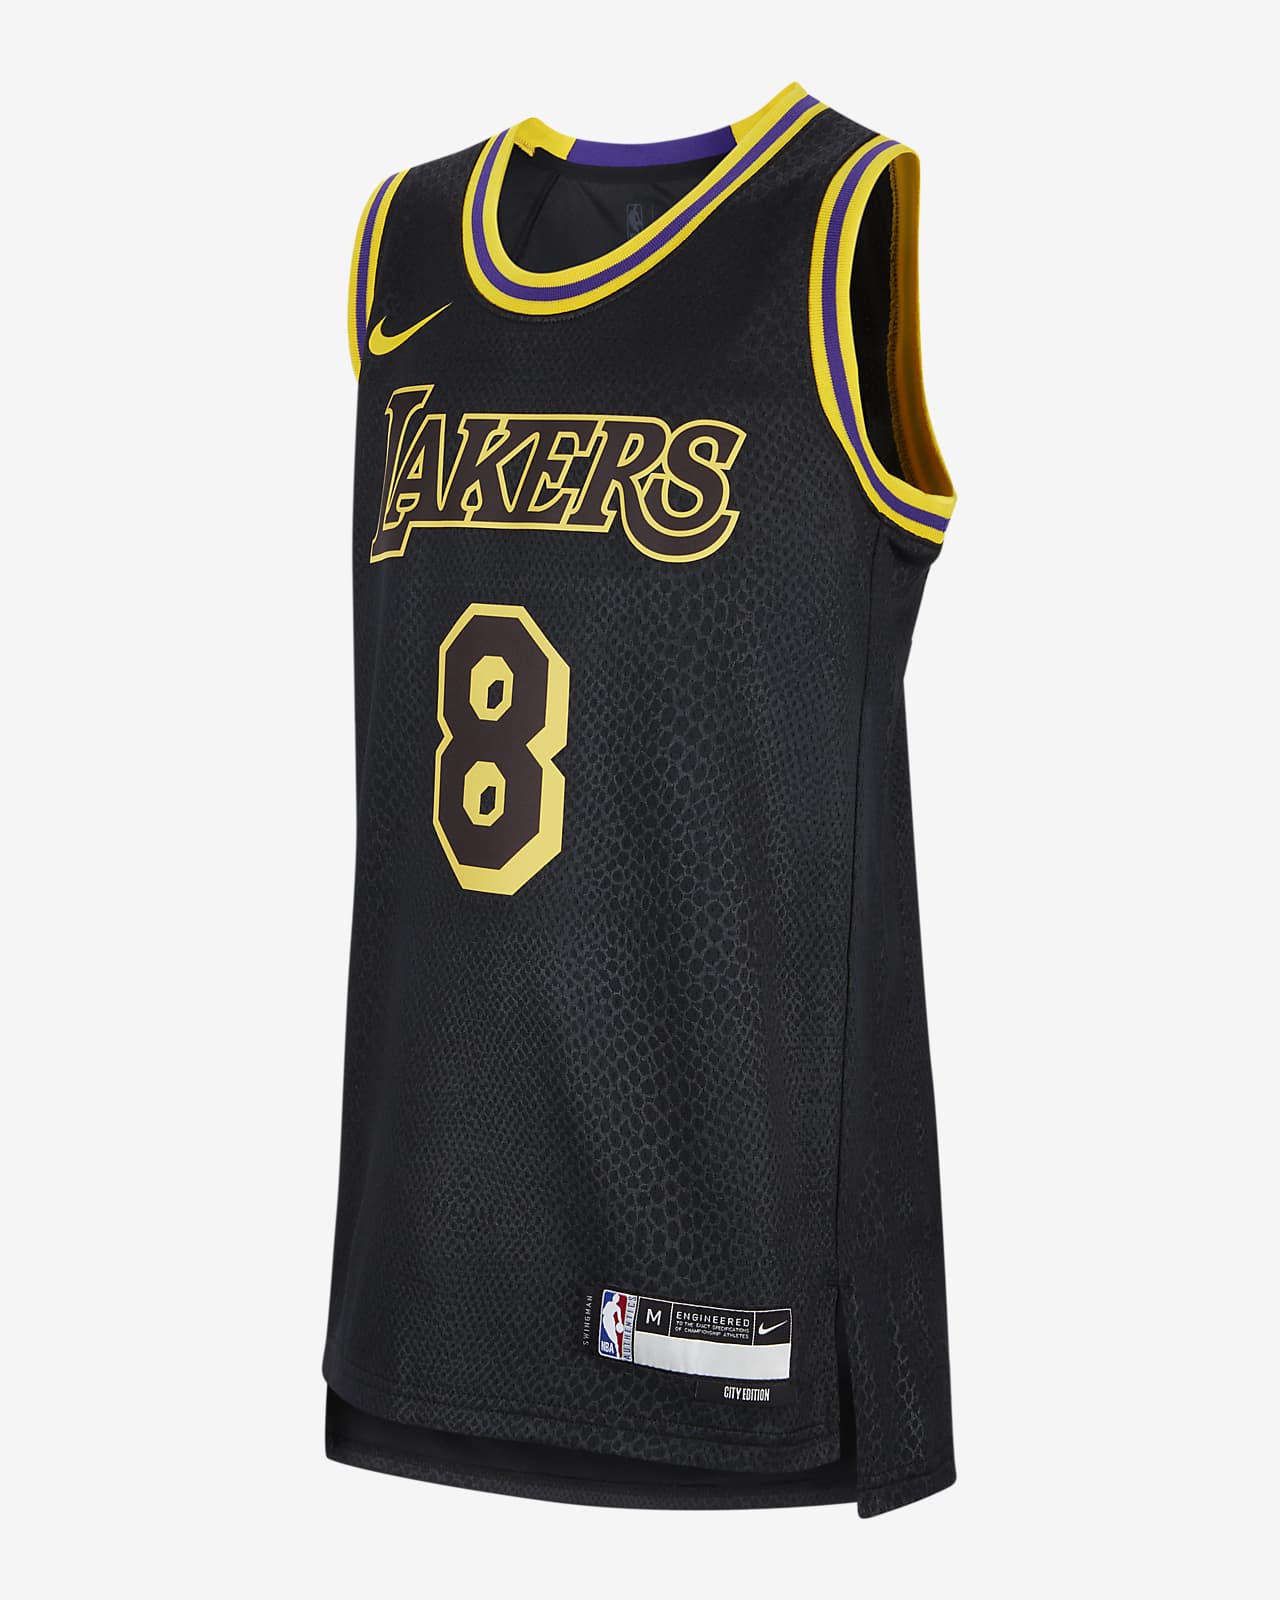 洛杉矶湖人队 (Kobe Bryant) City Edition Nike Dri-FIT Swingman Jersey 大童（男孩）速干球衣